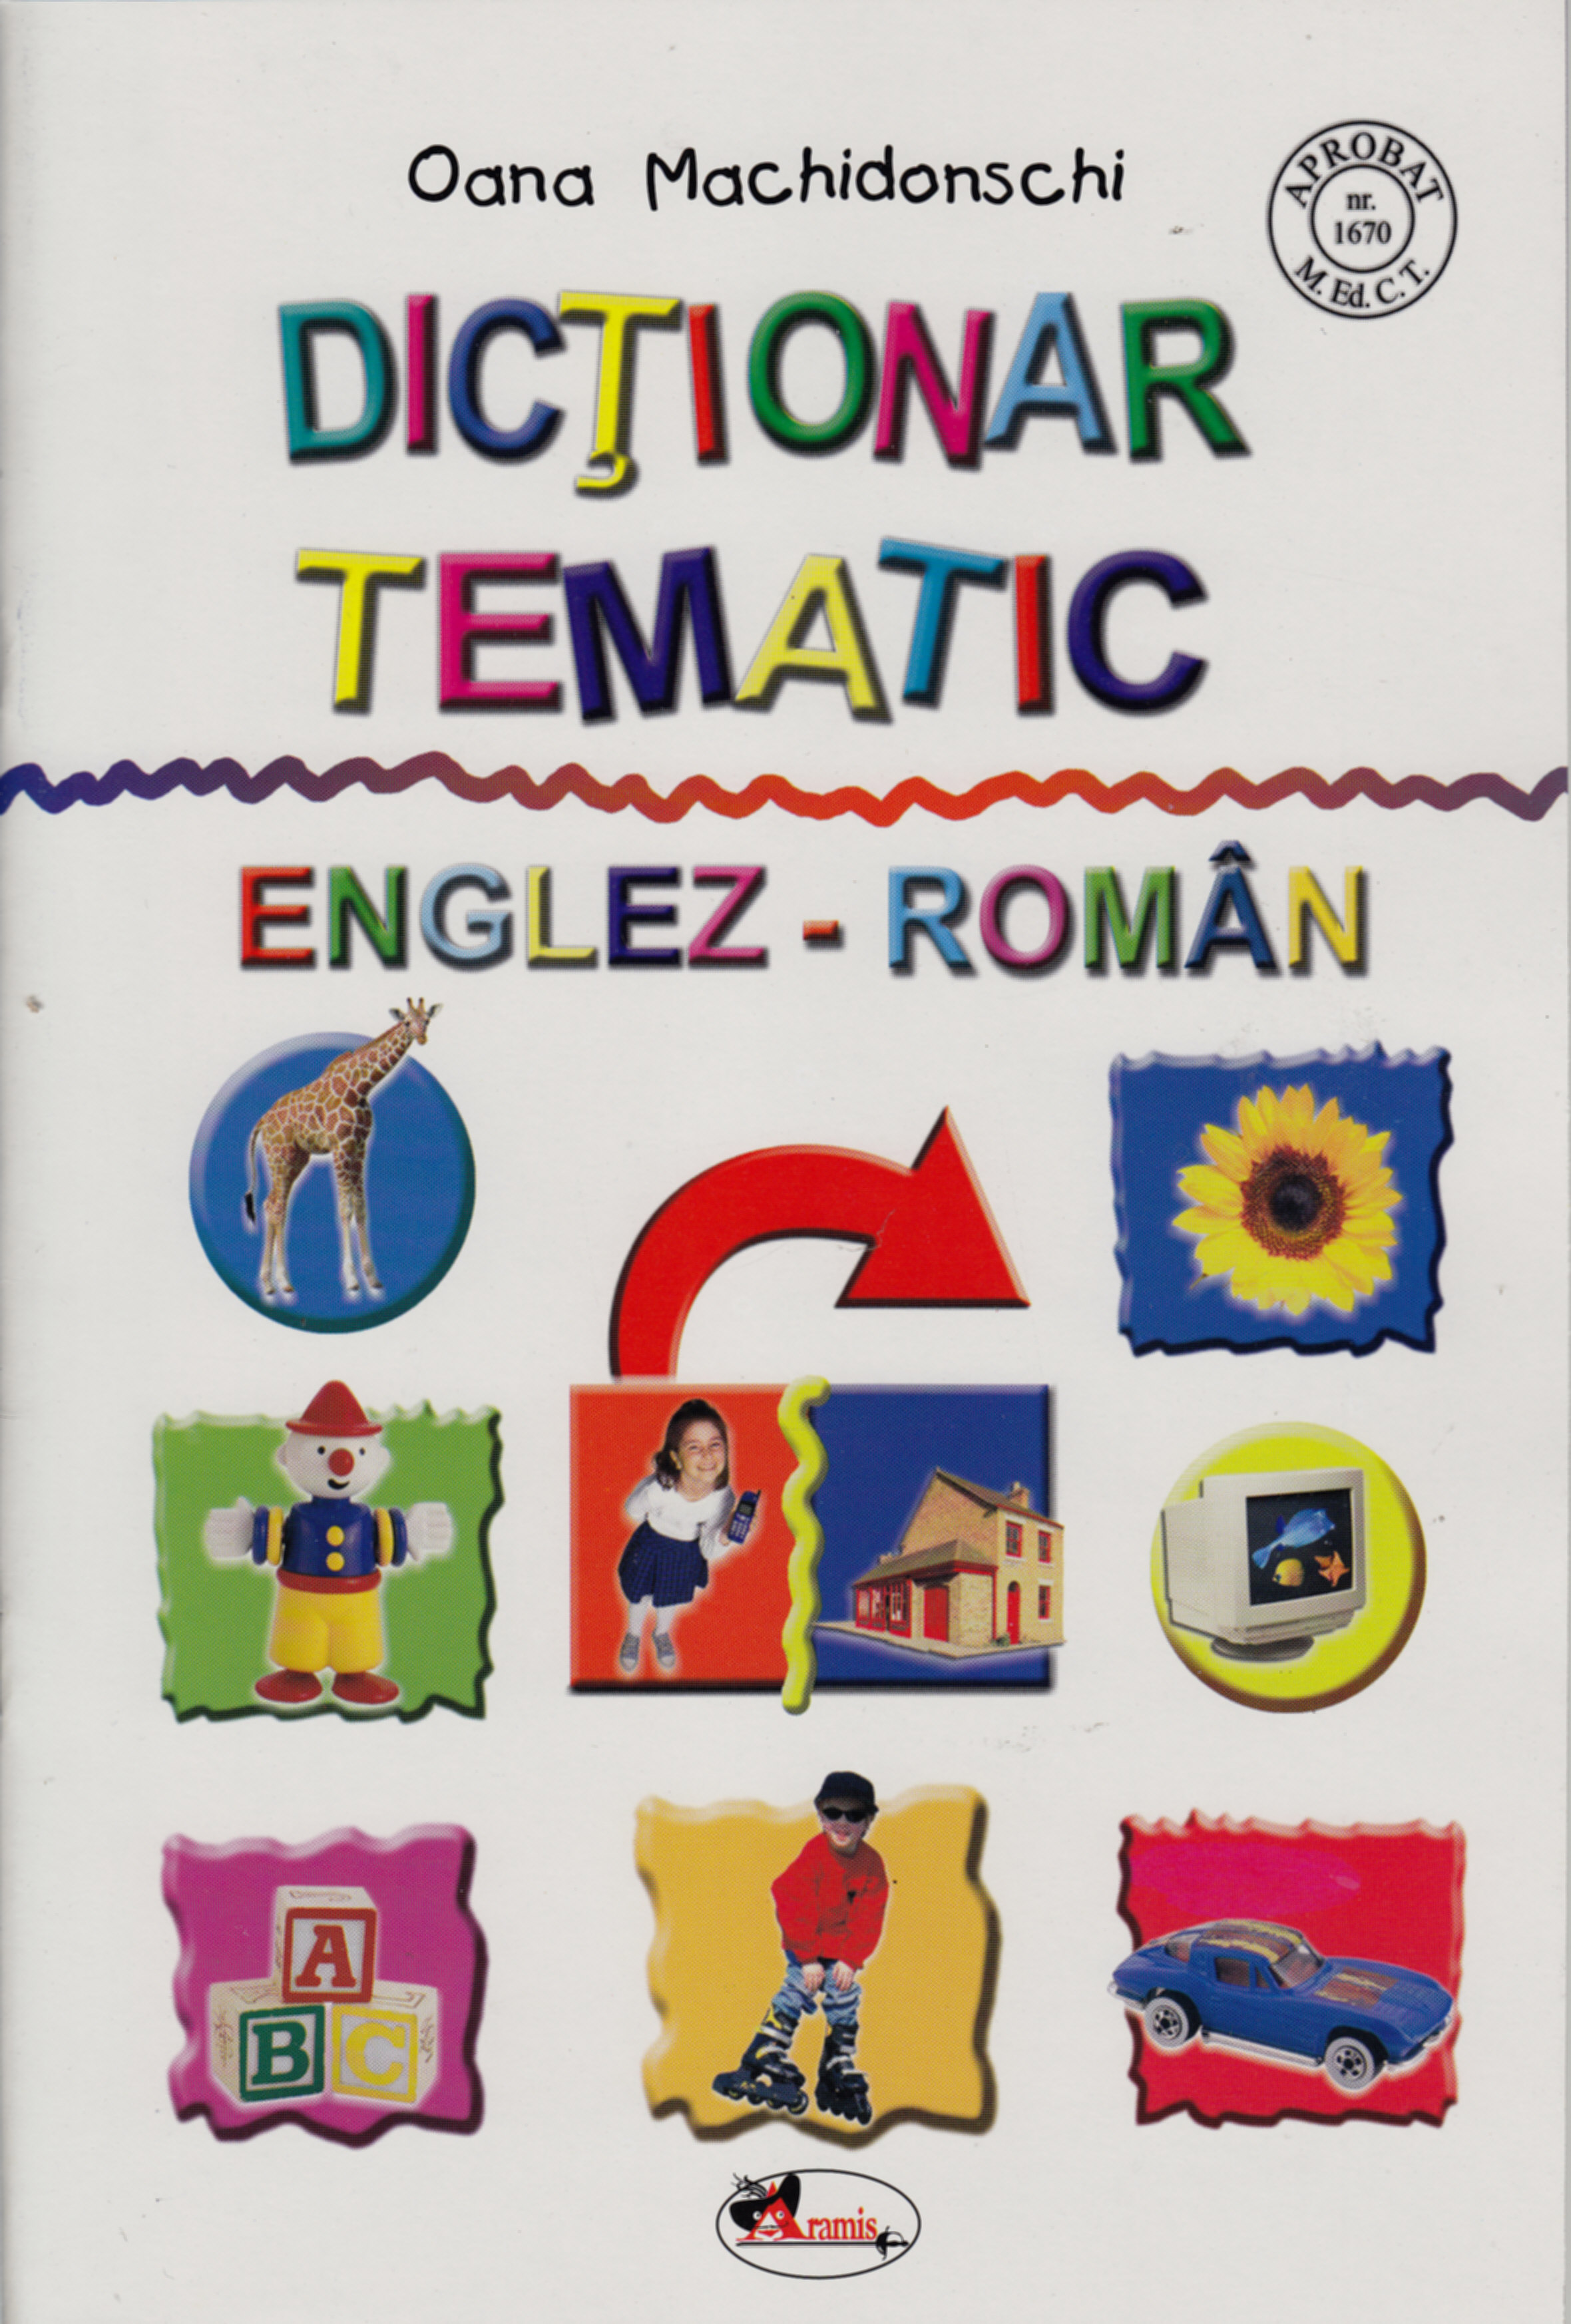 Dictionar Tematic Englez-Roman - Oana Machidonschi